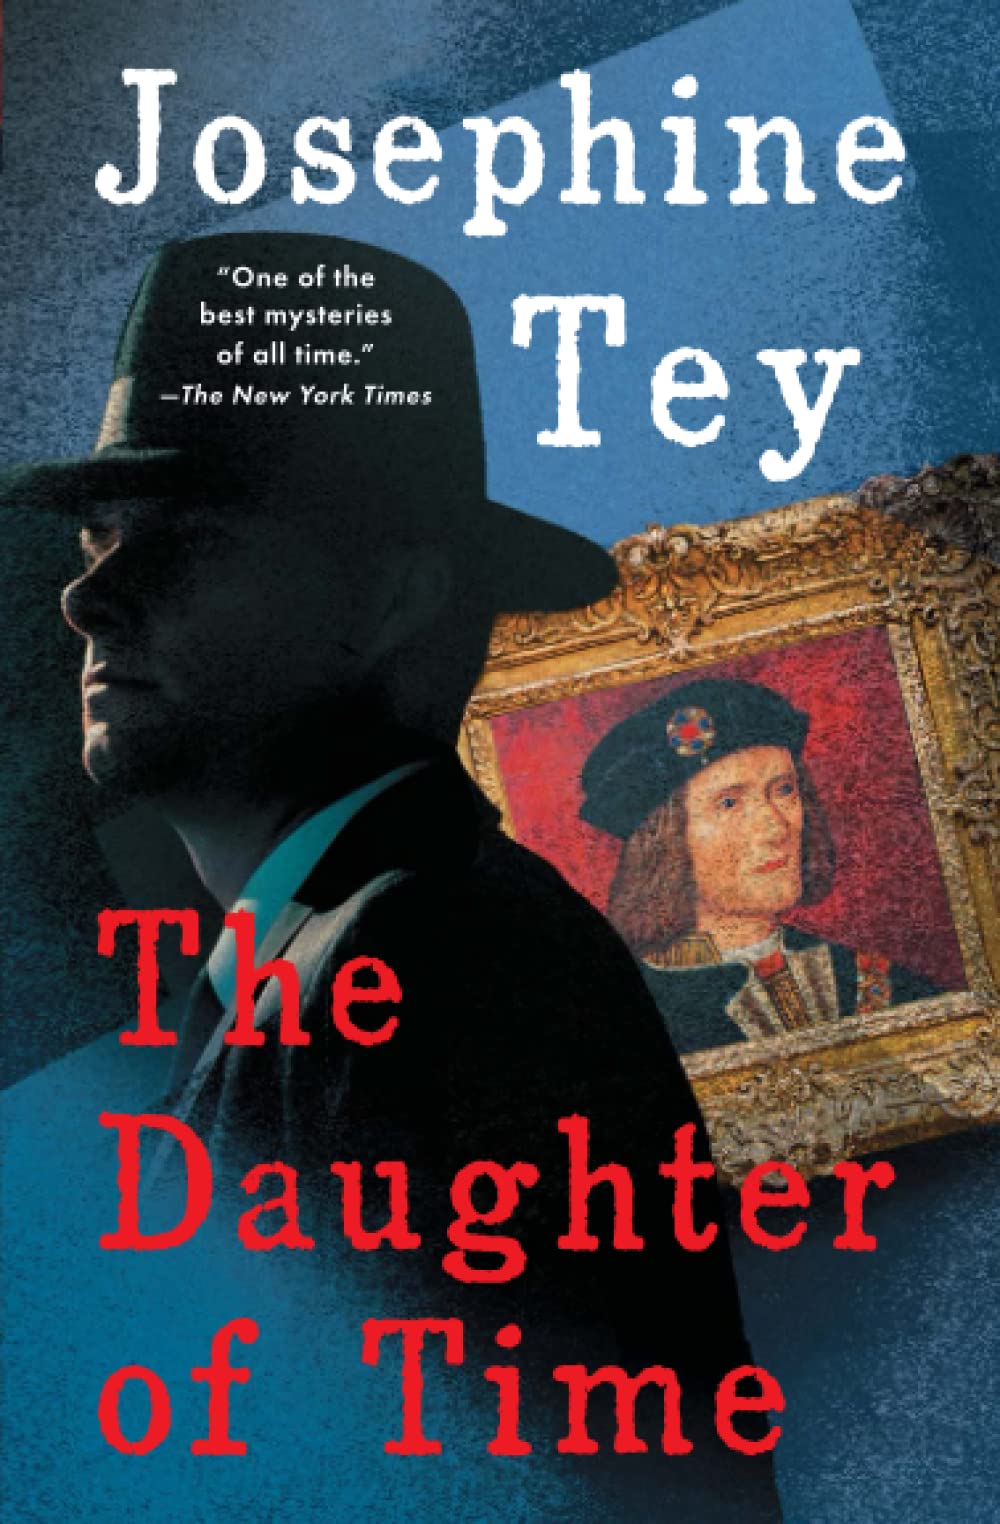 Daughter of Time (Tey - paperback)